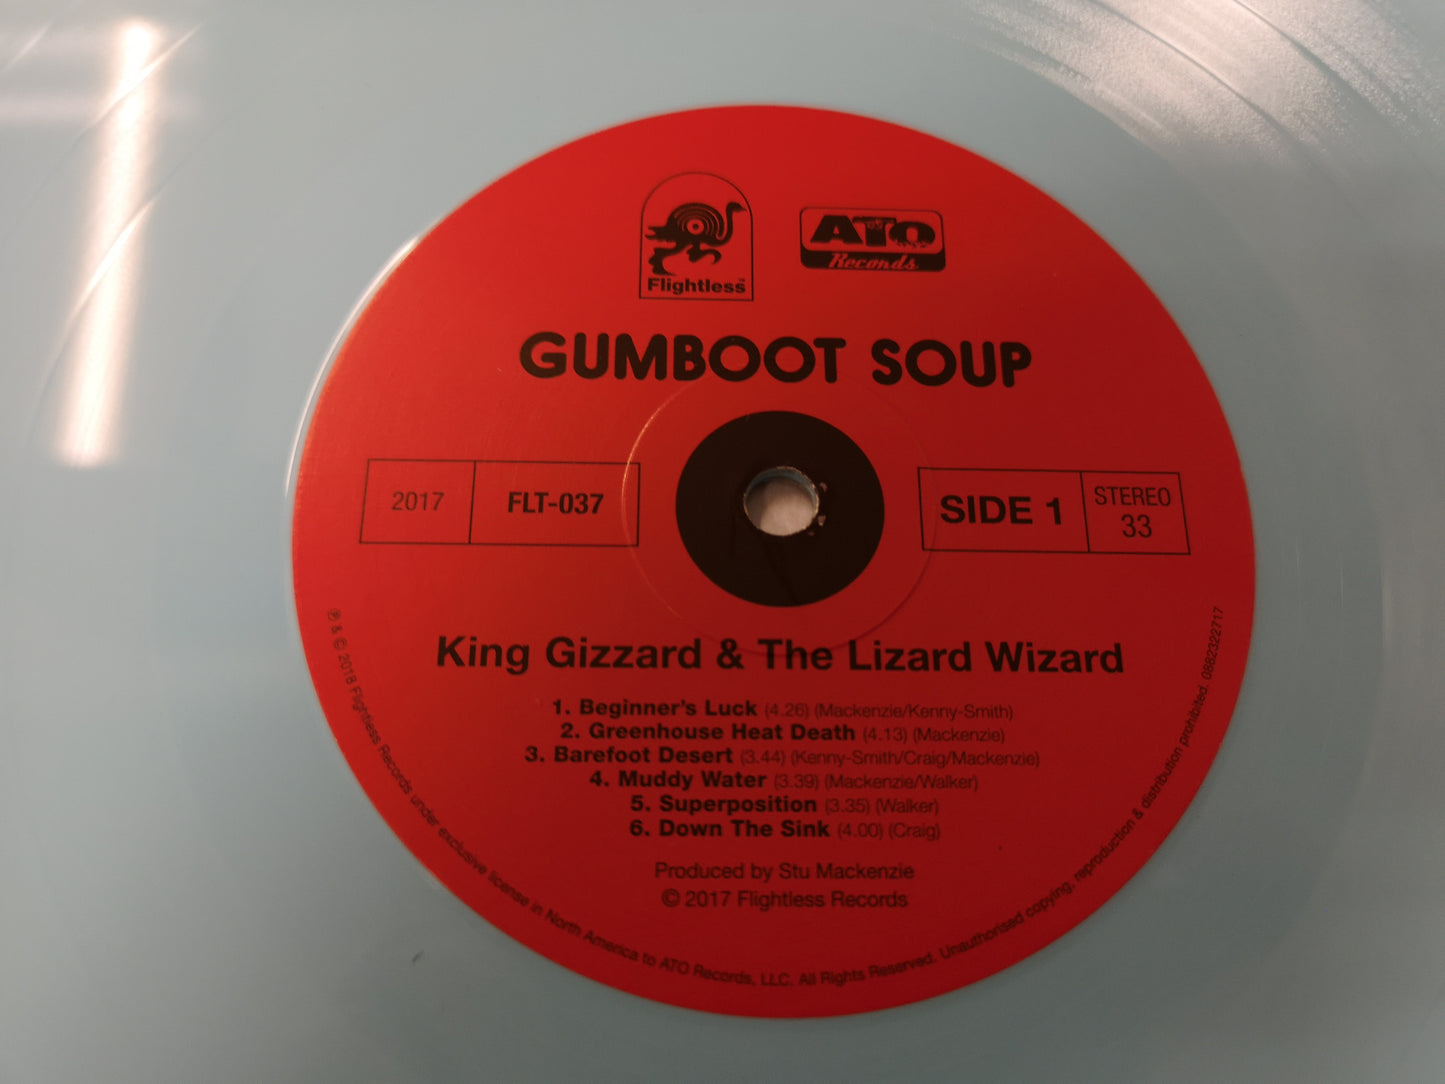 King Gizzard and the Lizard Wizard "Gumboot Soup" MINT RE Australia 2018 Blue Vinyl